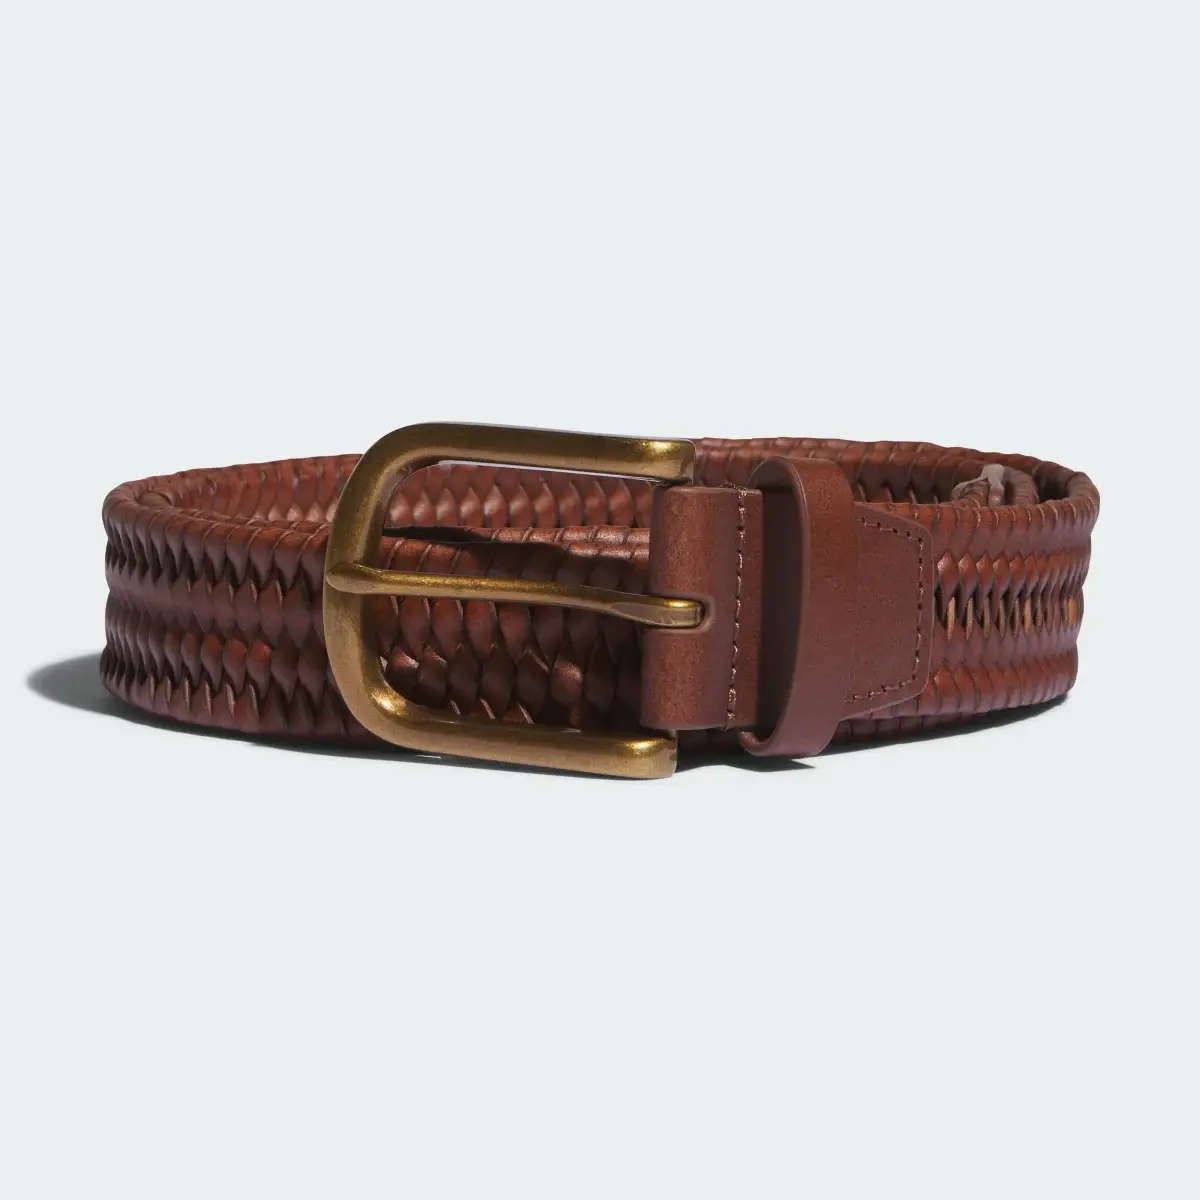 Adidas Golf Woven Leather Belt. 2